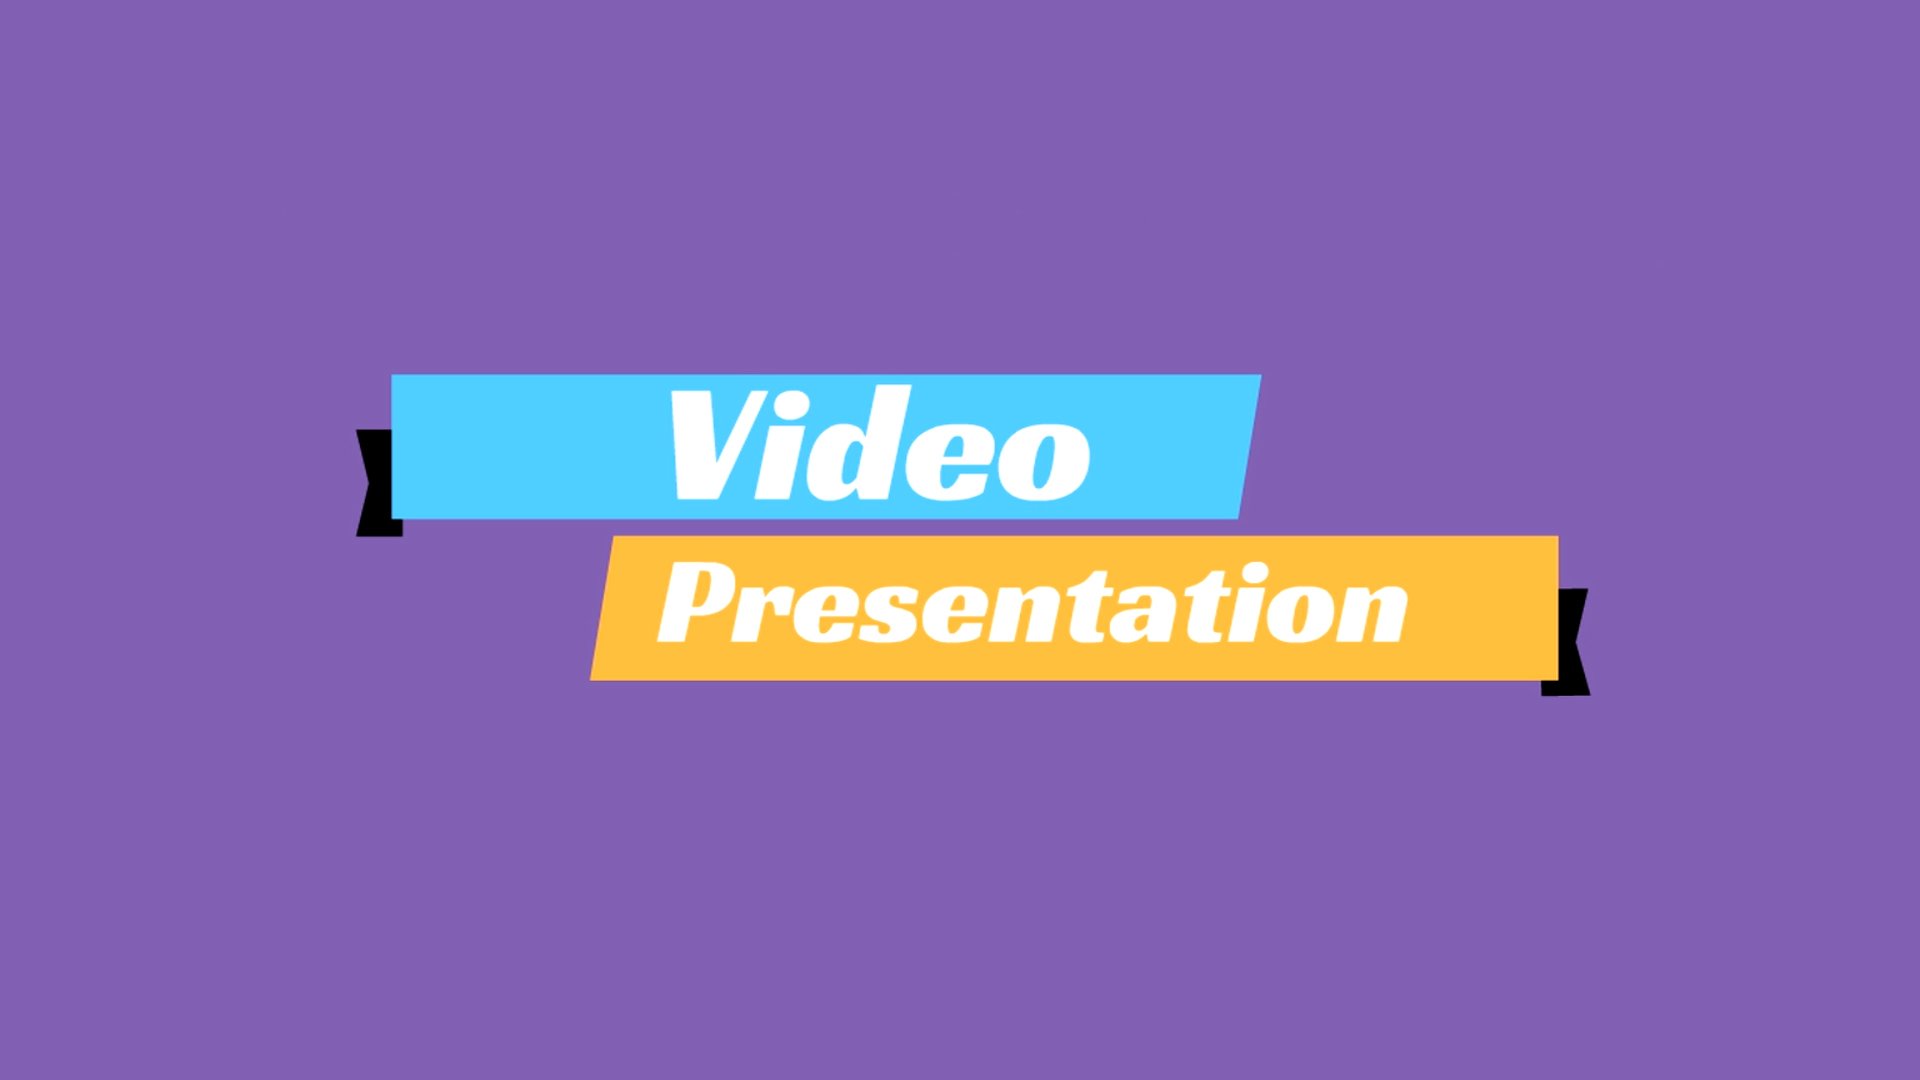 Video Presentation maker